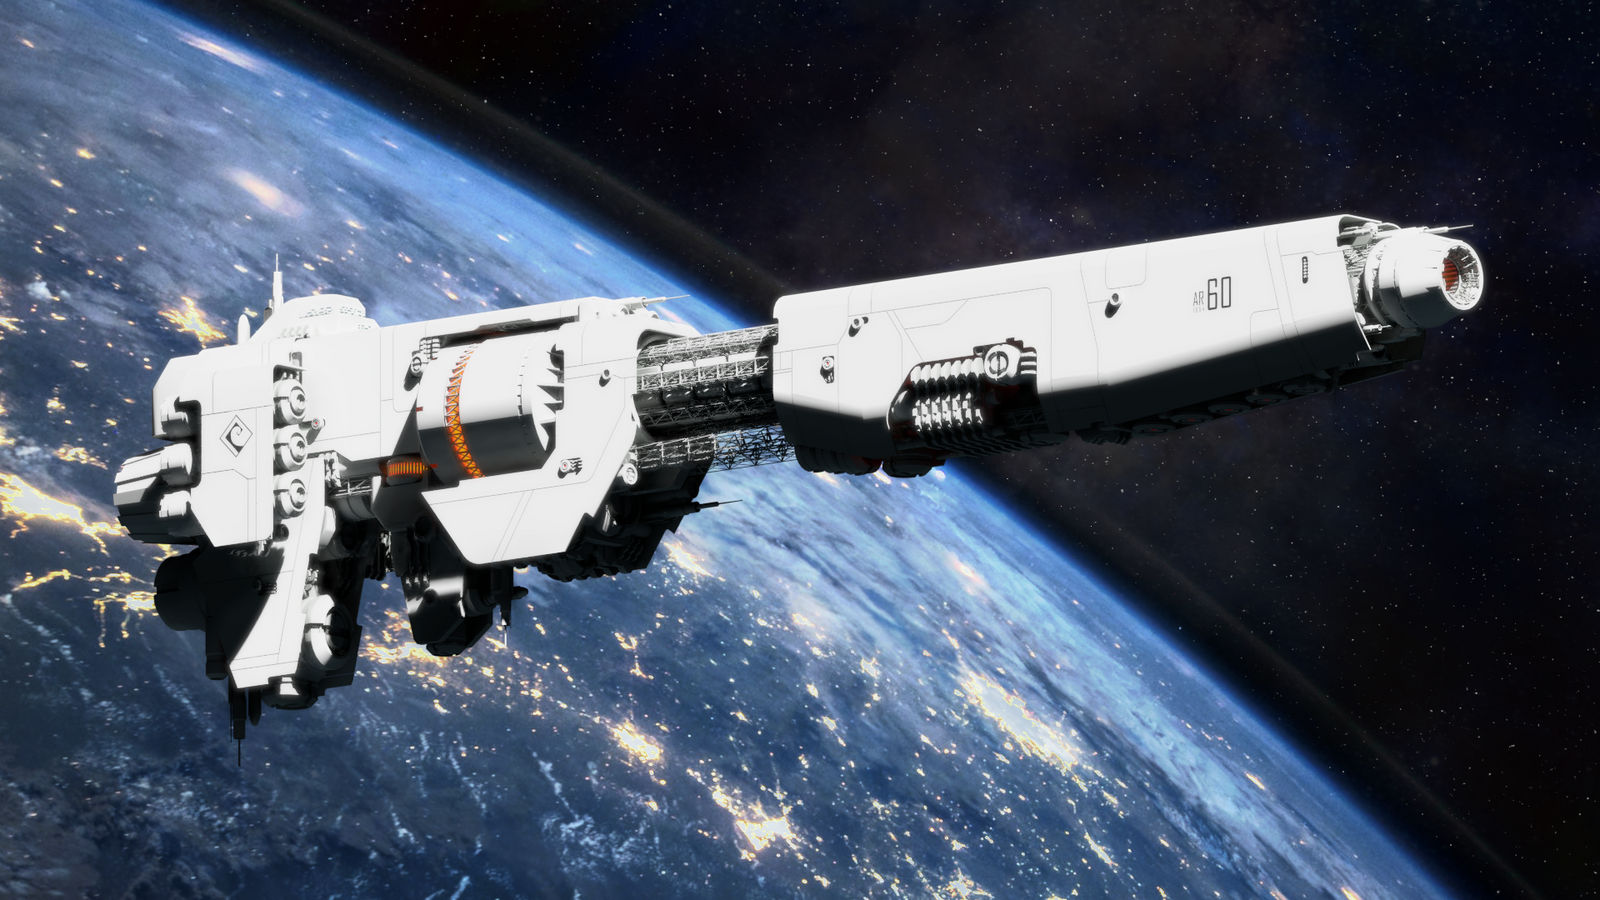 Make a Space Battleship - BlenderNation